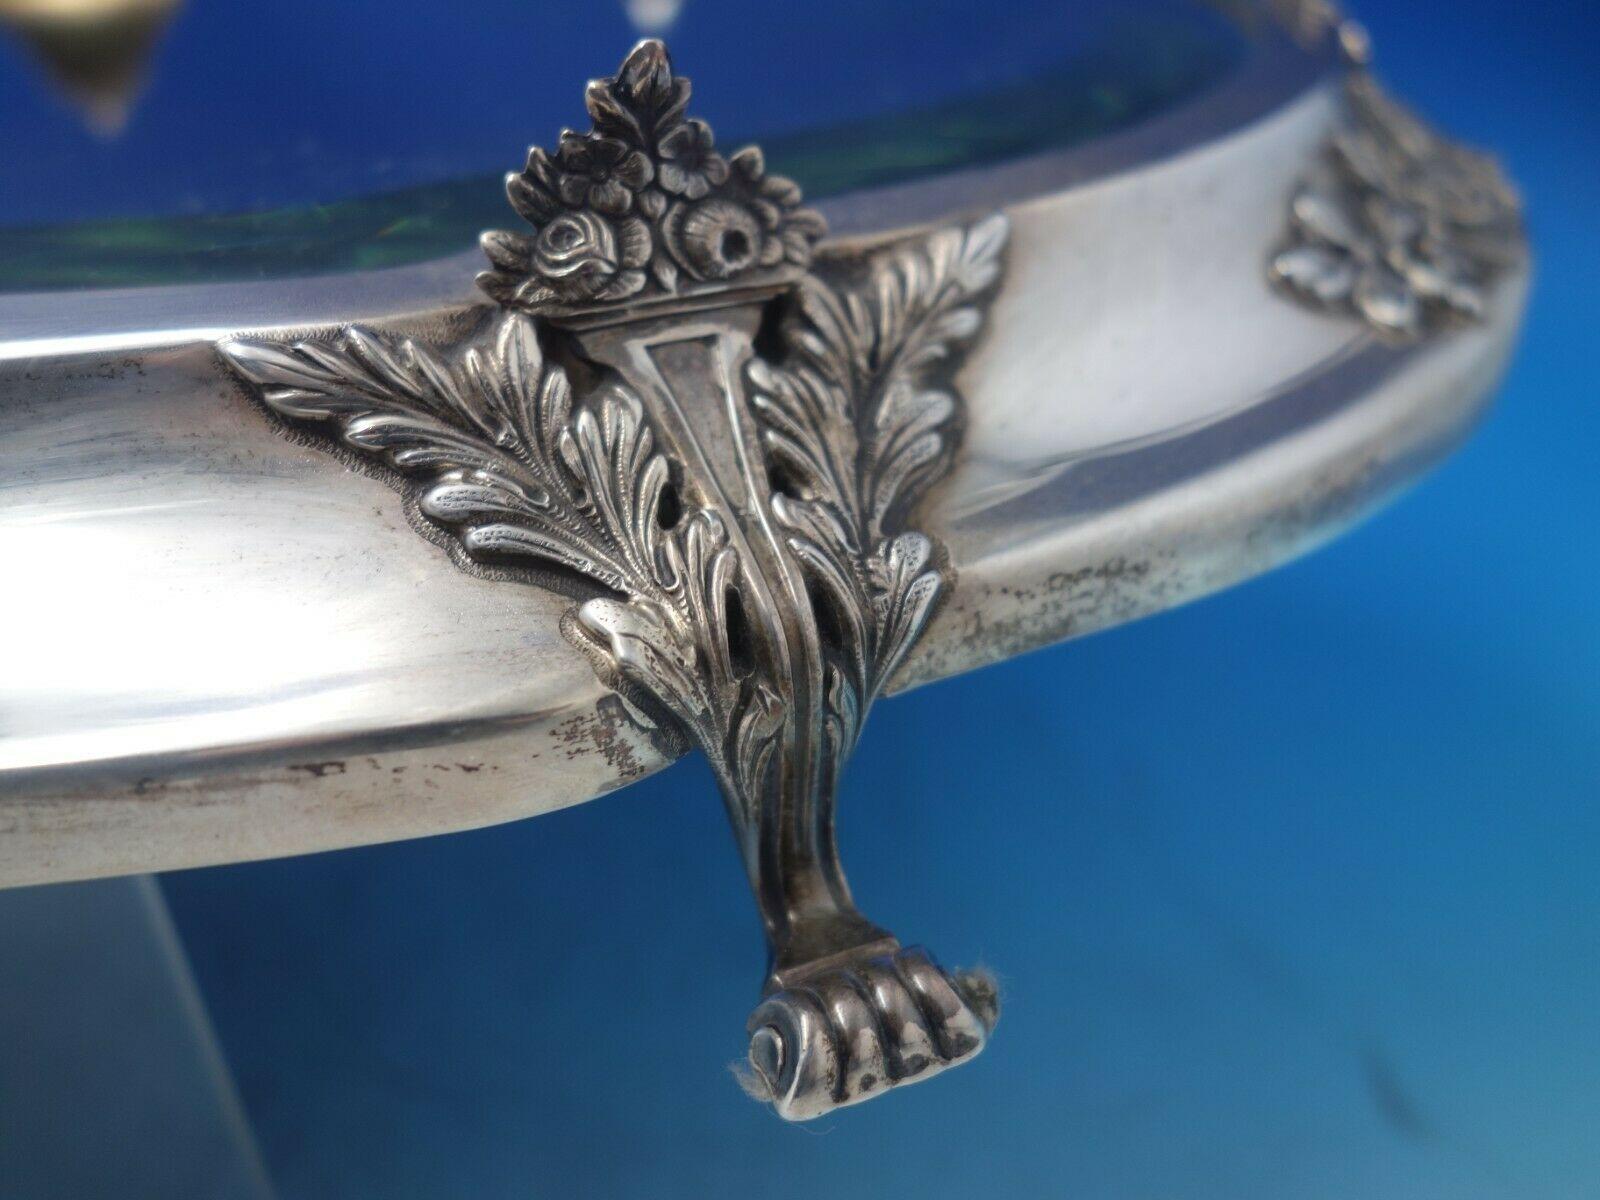 20th Century Topazio Portuguese Sterling Silver Centerpiece Bowl with Dragon Handles '#6496'